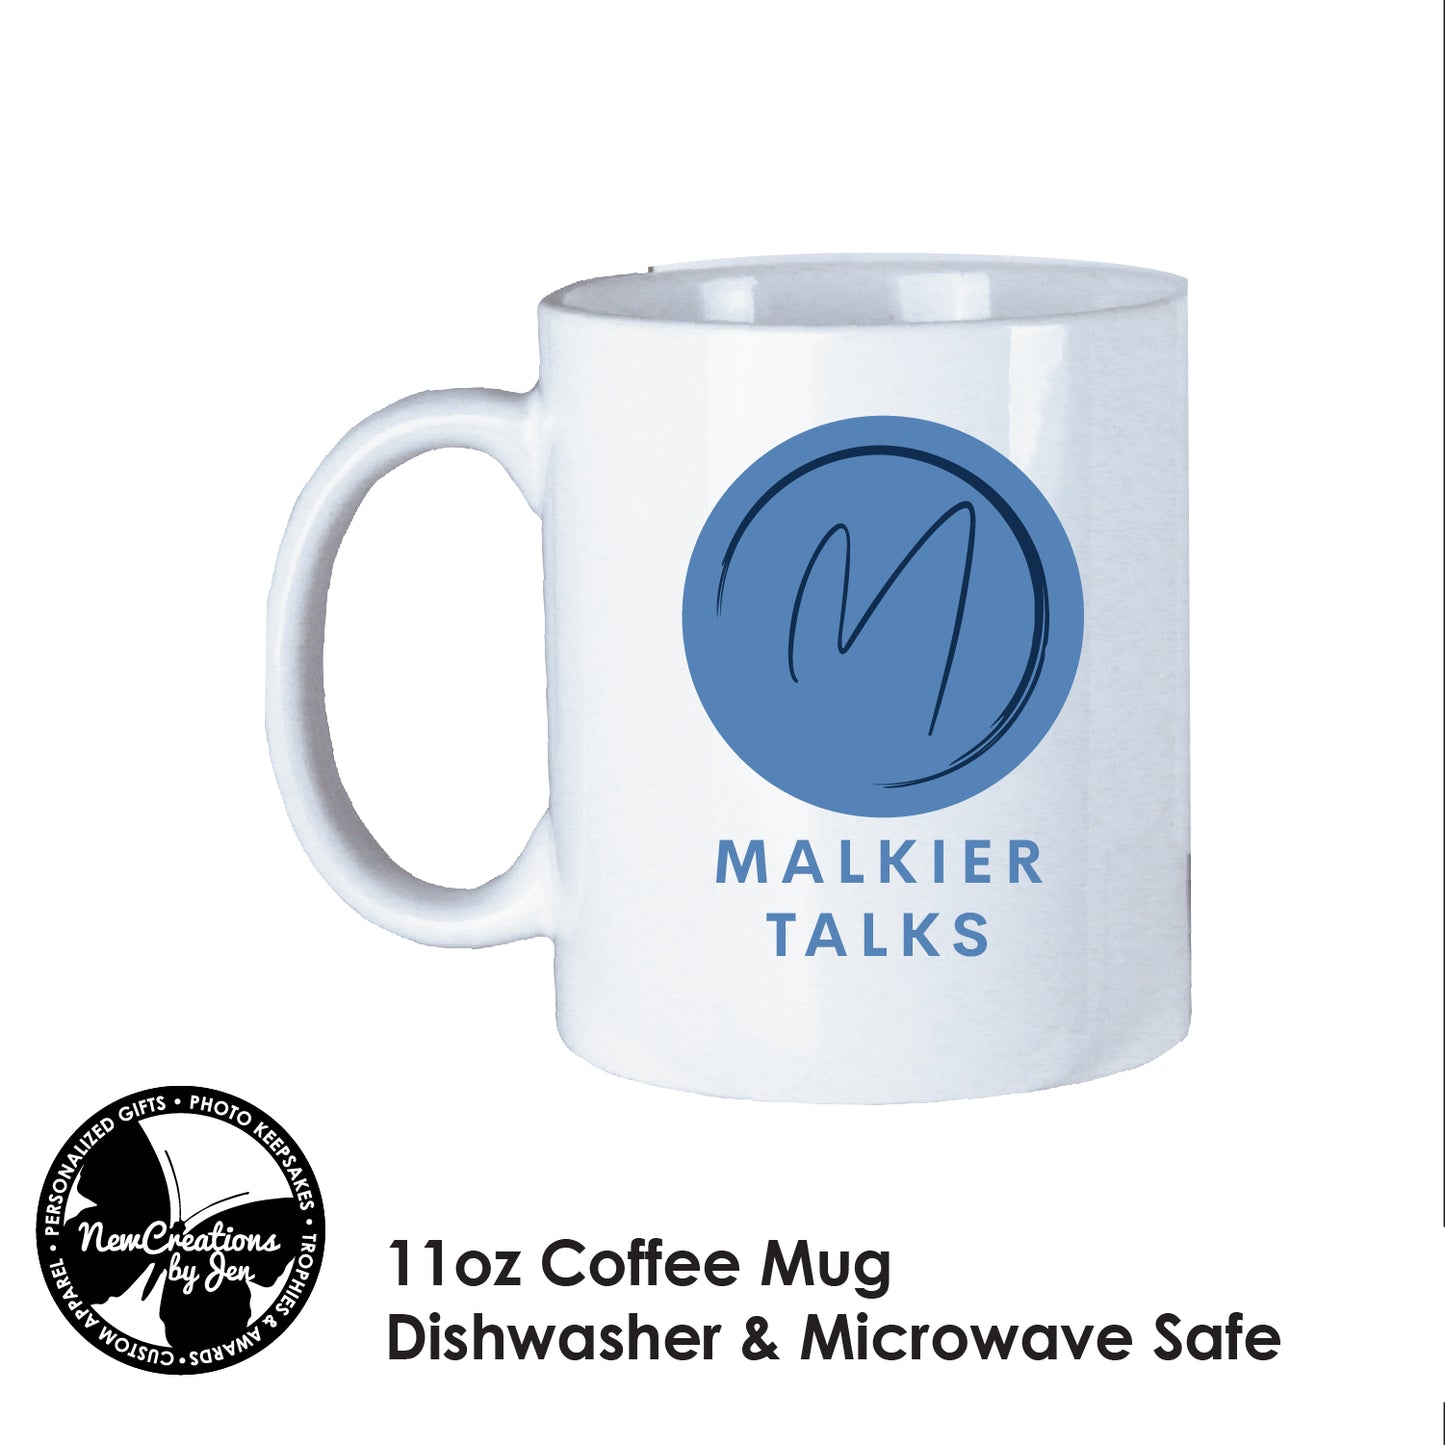 Malkier 11oz Coffee Mug